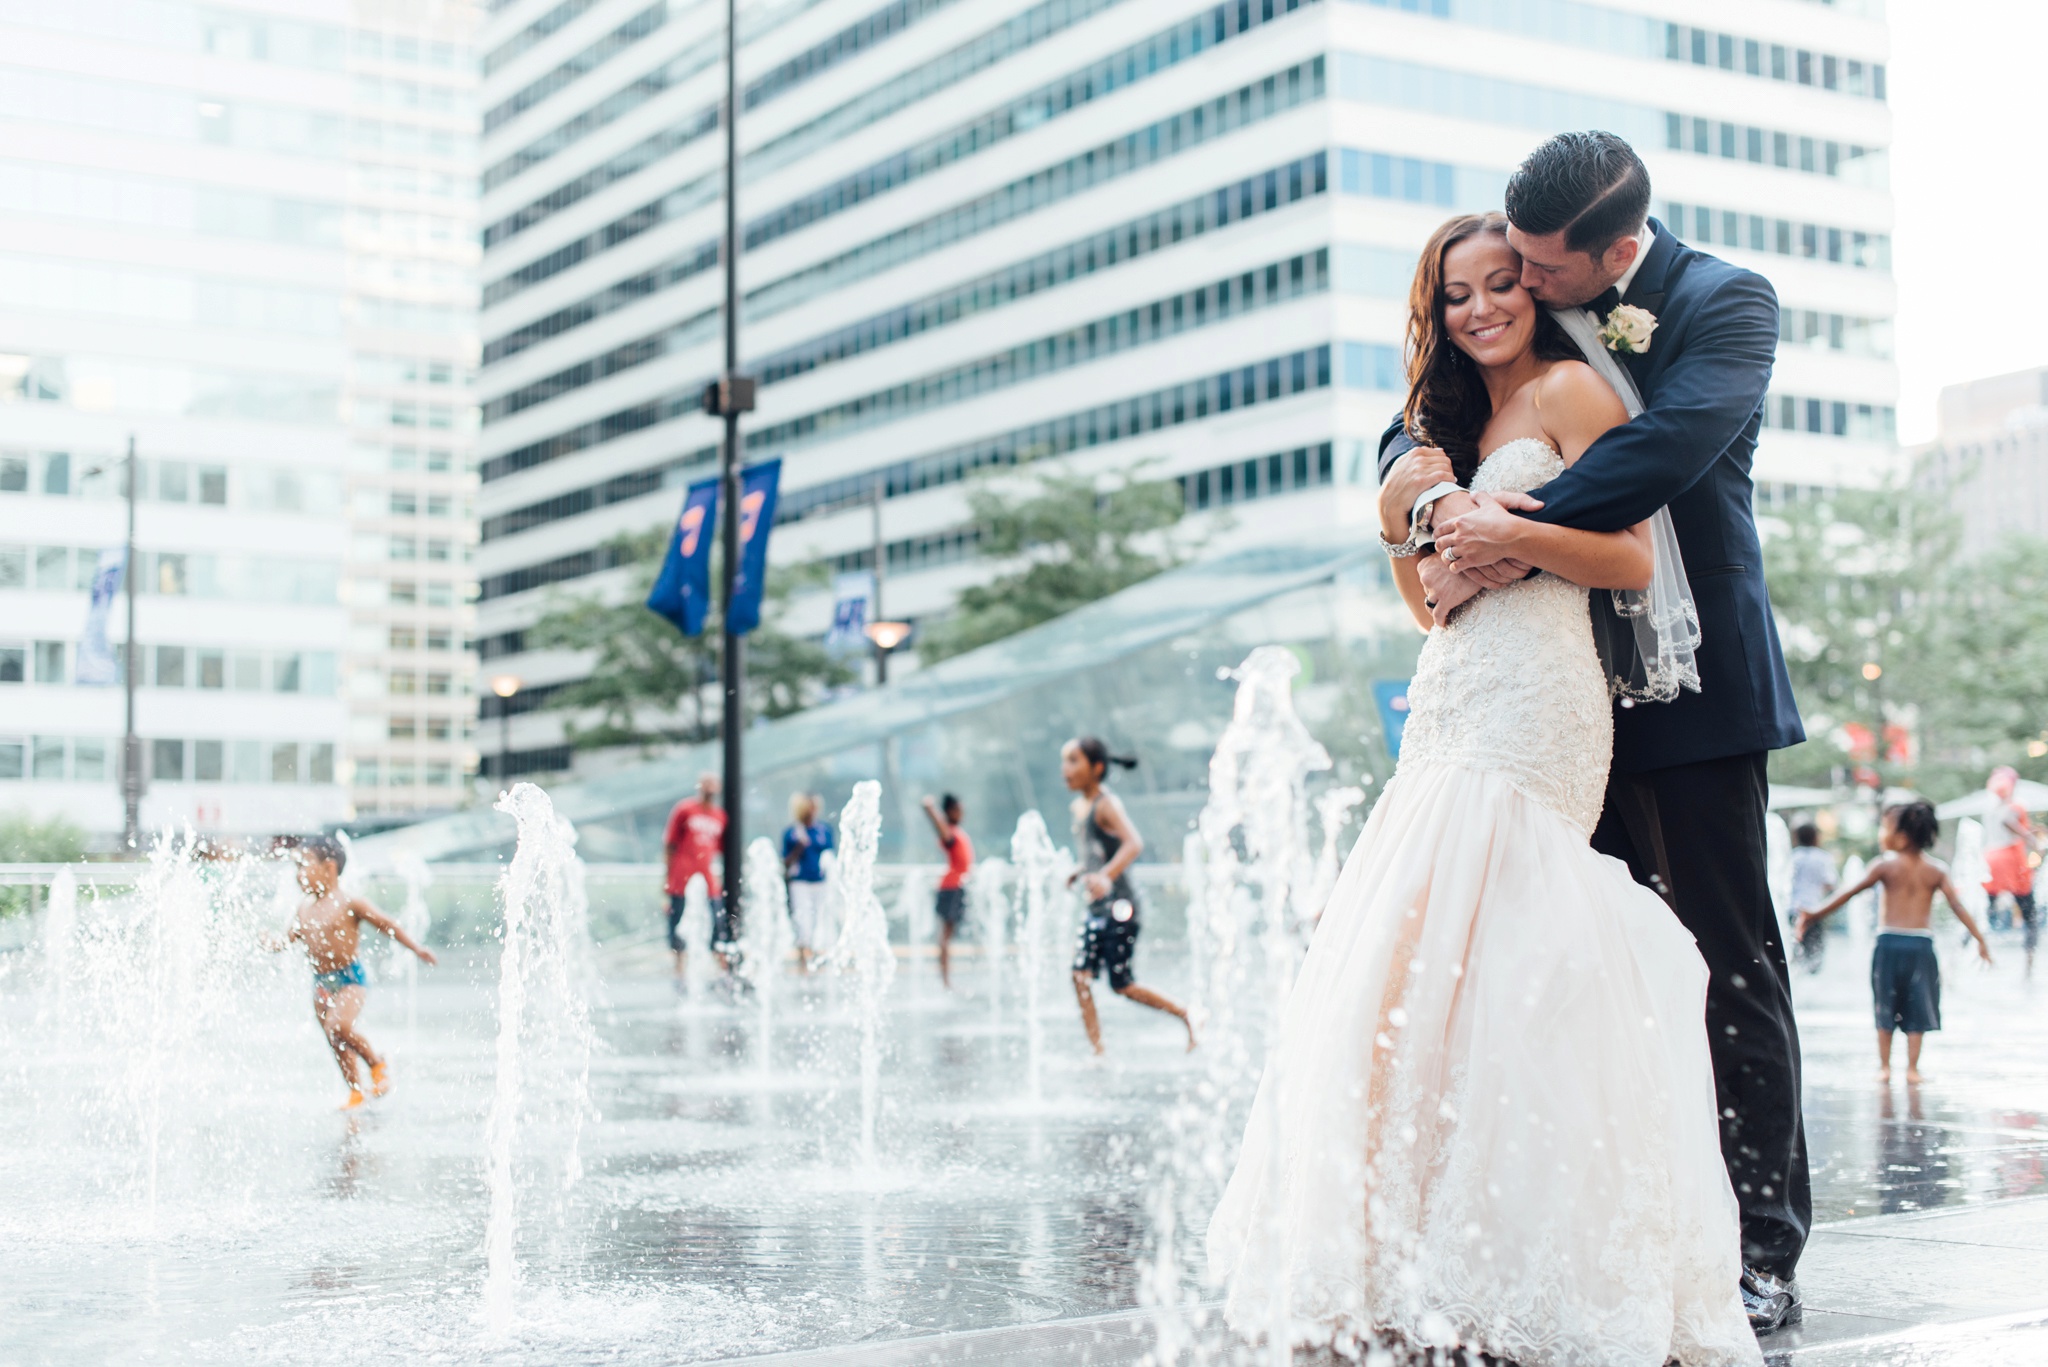 Stephanie + Justin - Dilworth Park - Philadelphia Wedding Photographer - Alison Dunn Photography photo